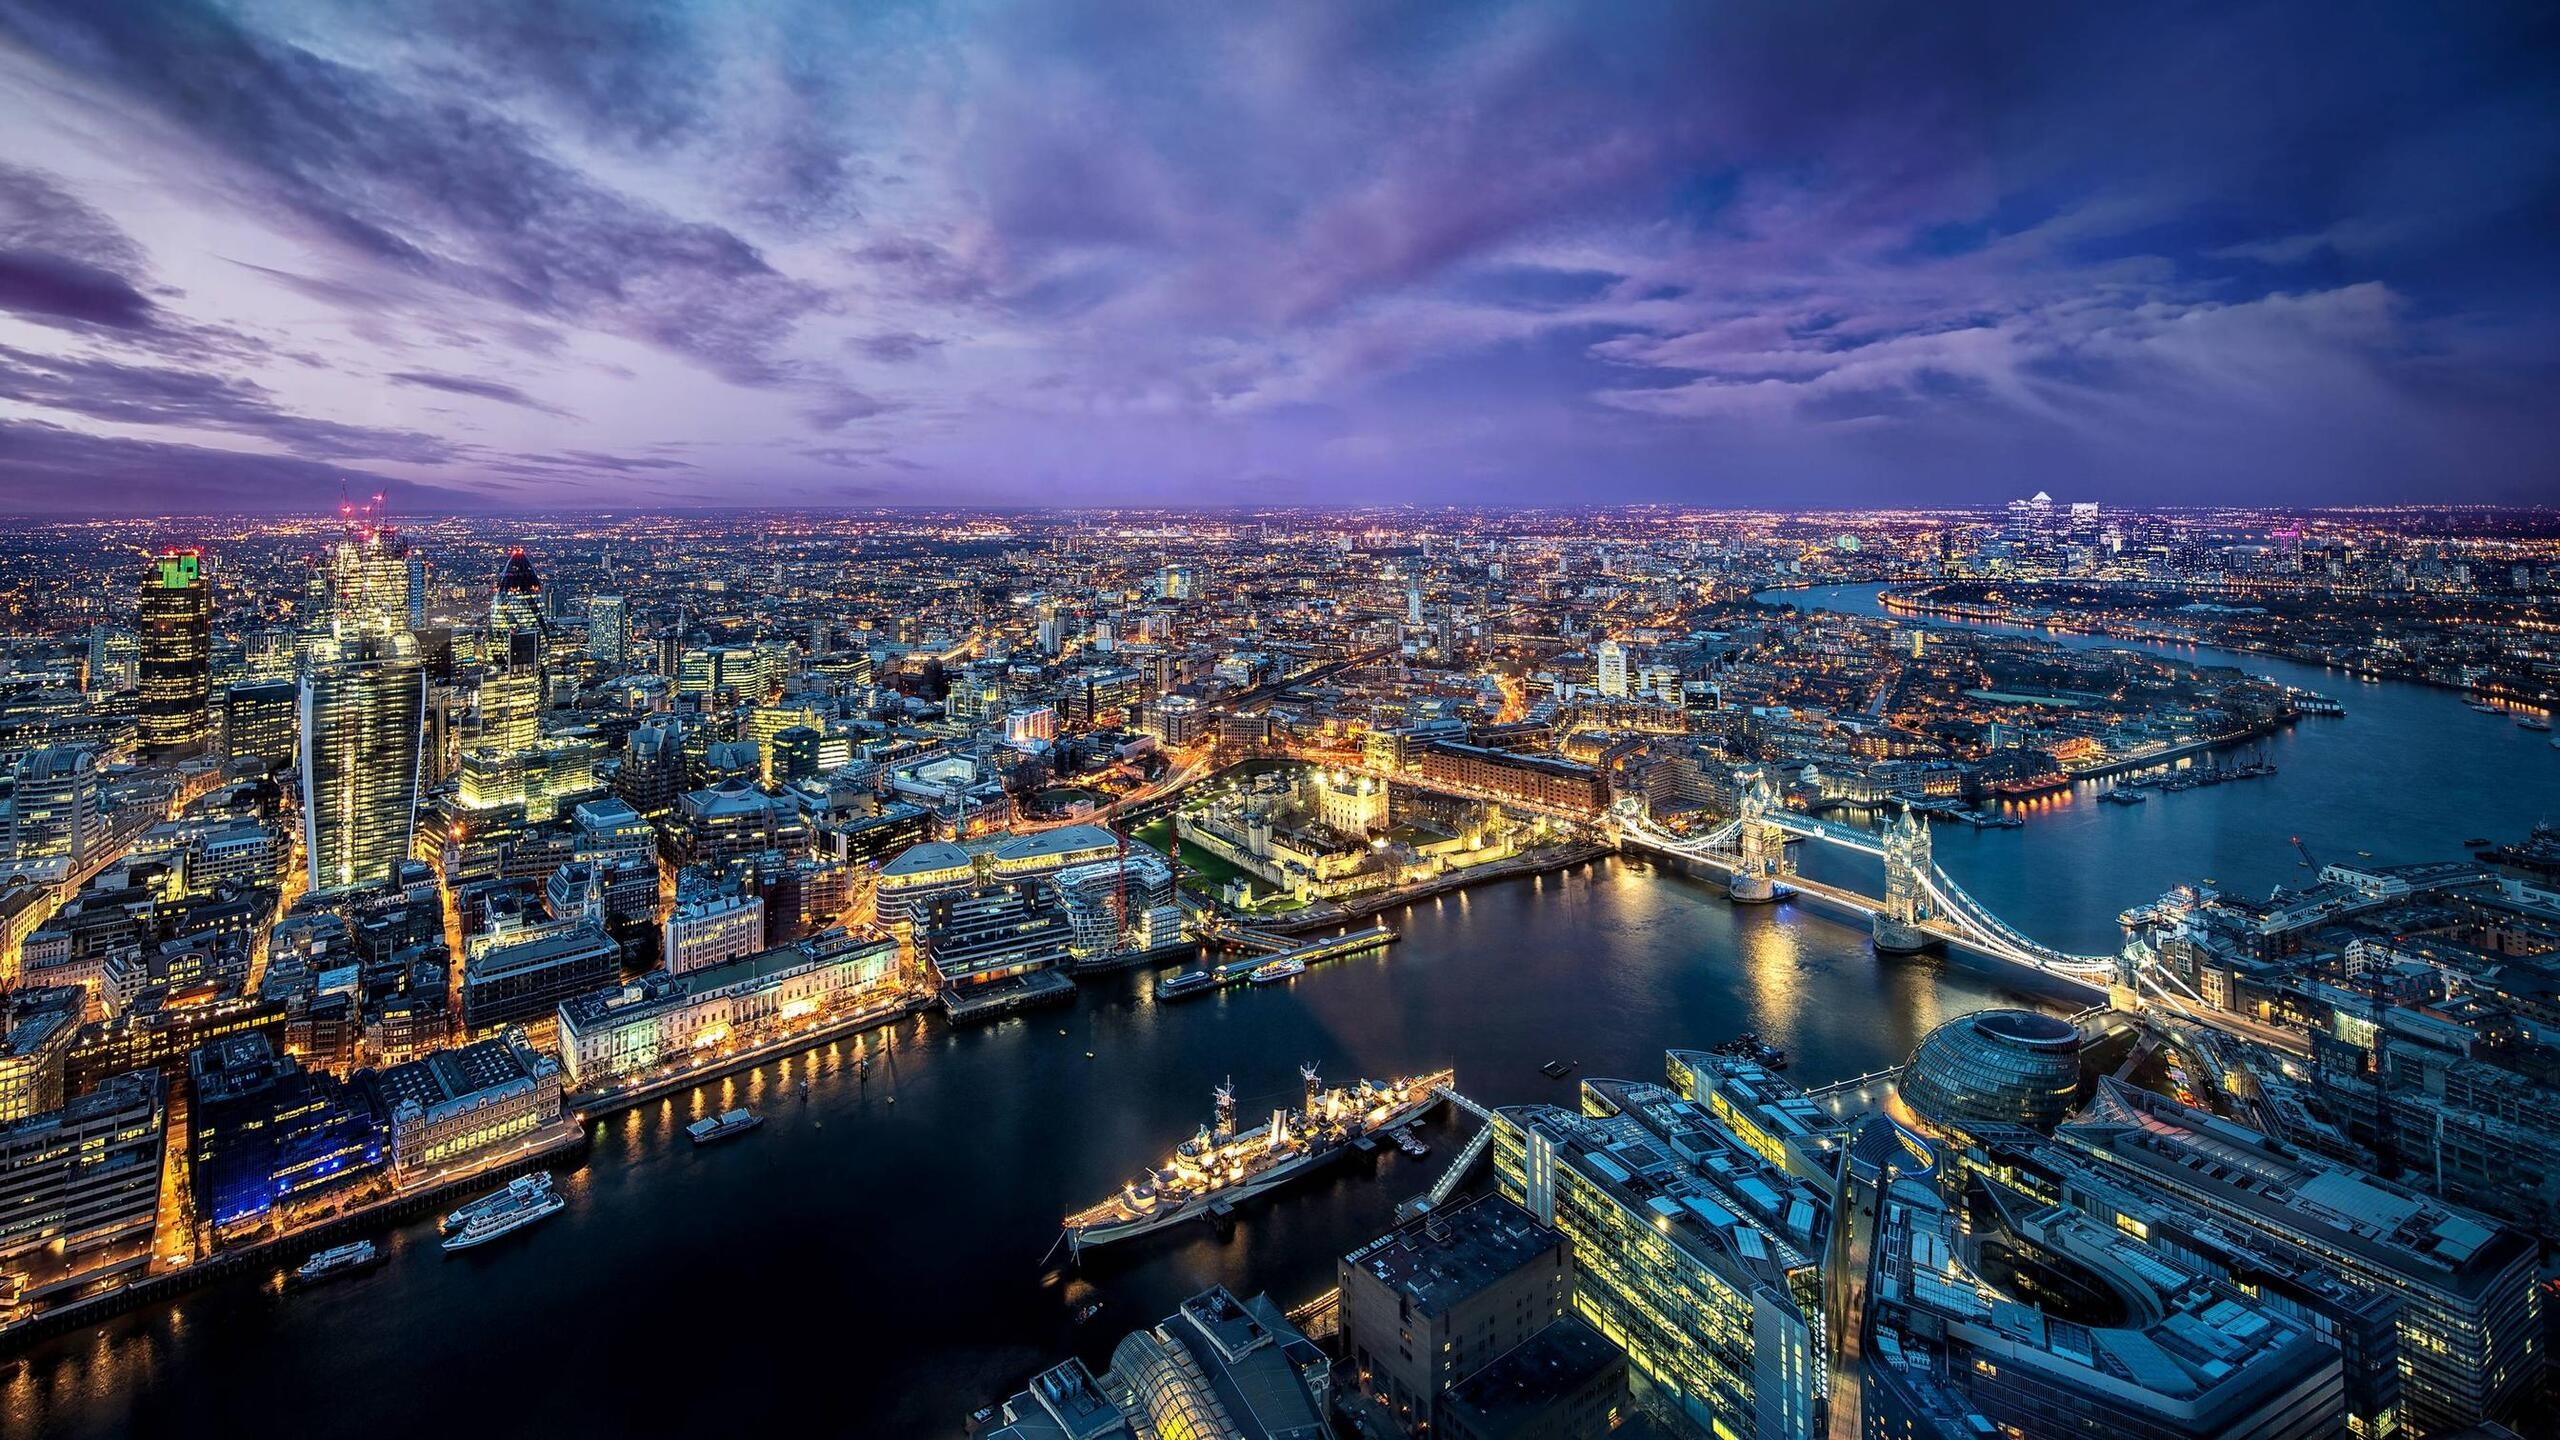 London: Stunning panoramic view, Night city, Thames. 2560x1440 HD Wallpaper.